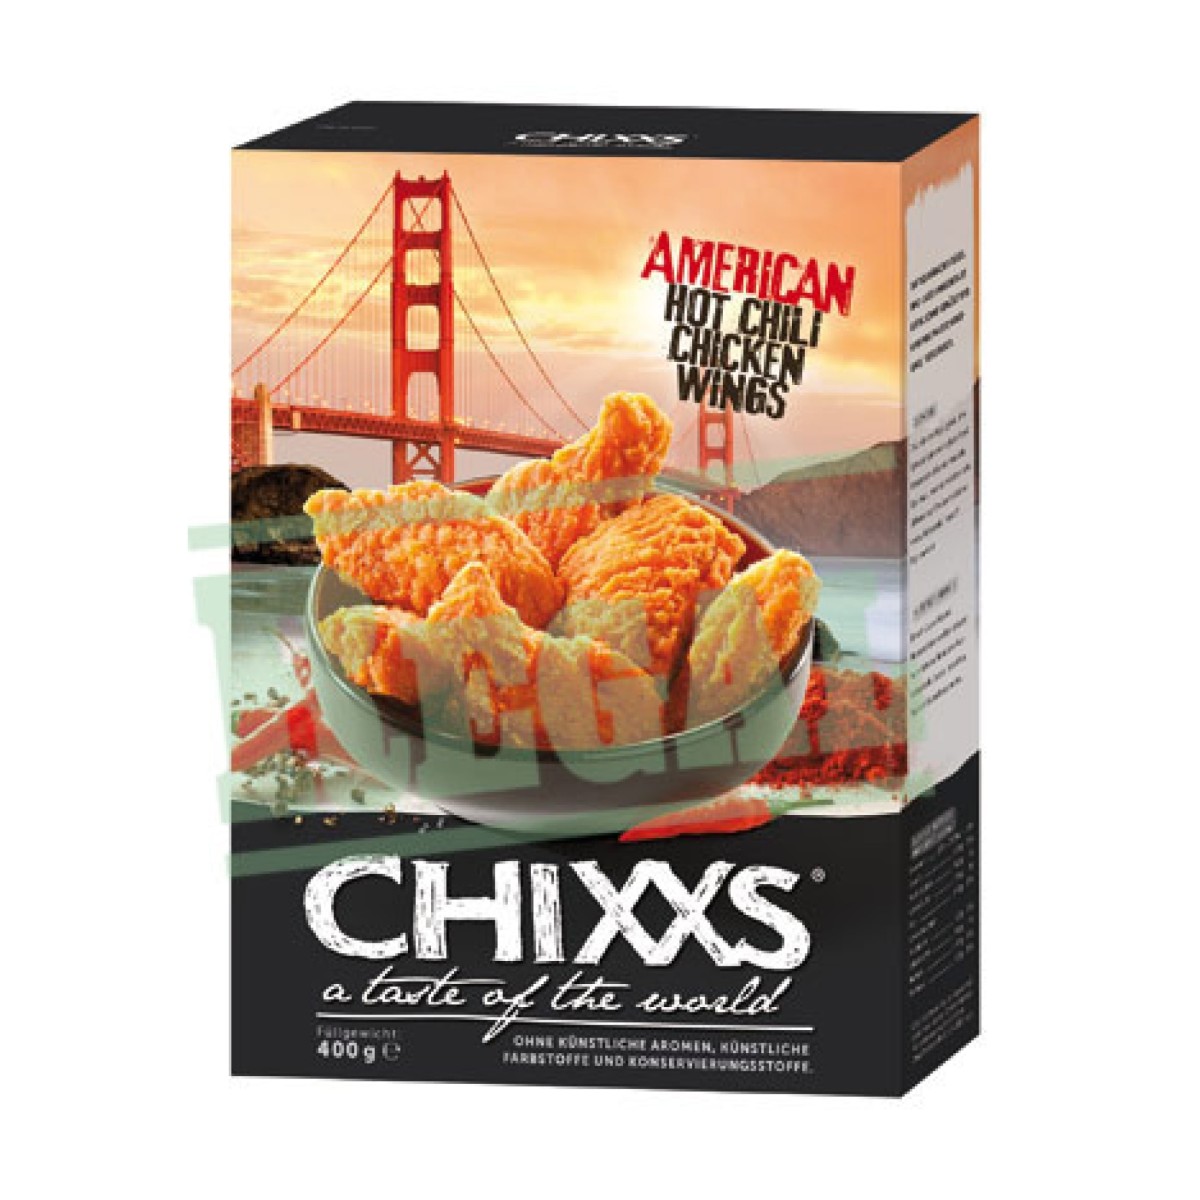 Wings American CHIXXS Chicken REGAL Chili → Hot